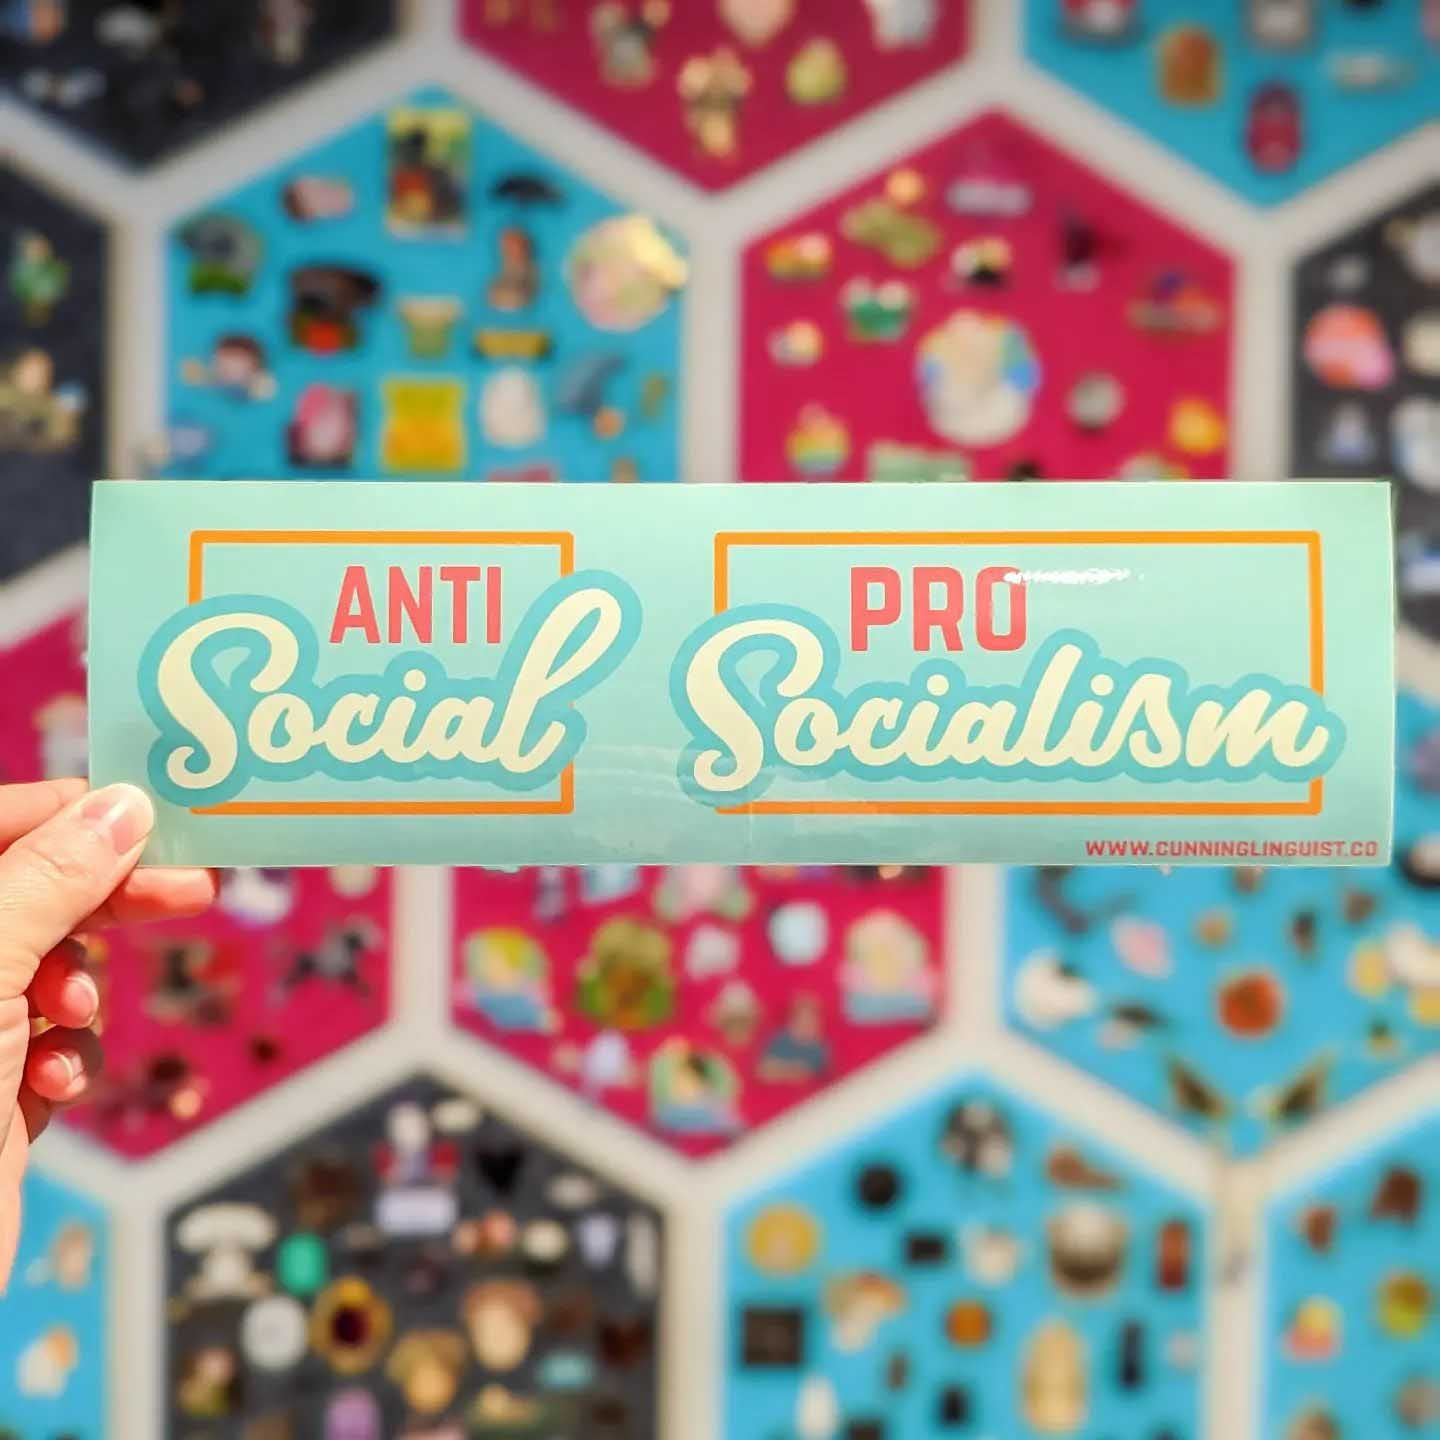 Antisocial/Pro-Socialism bumper sticker